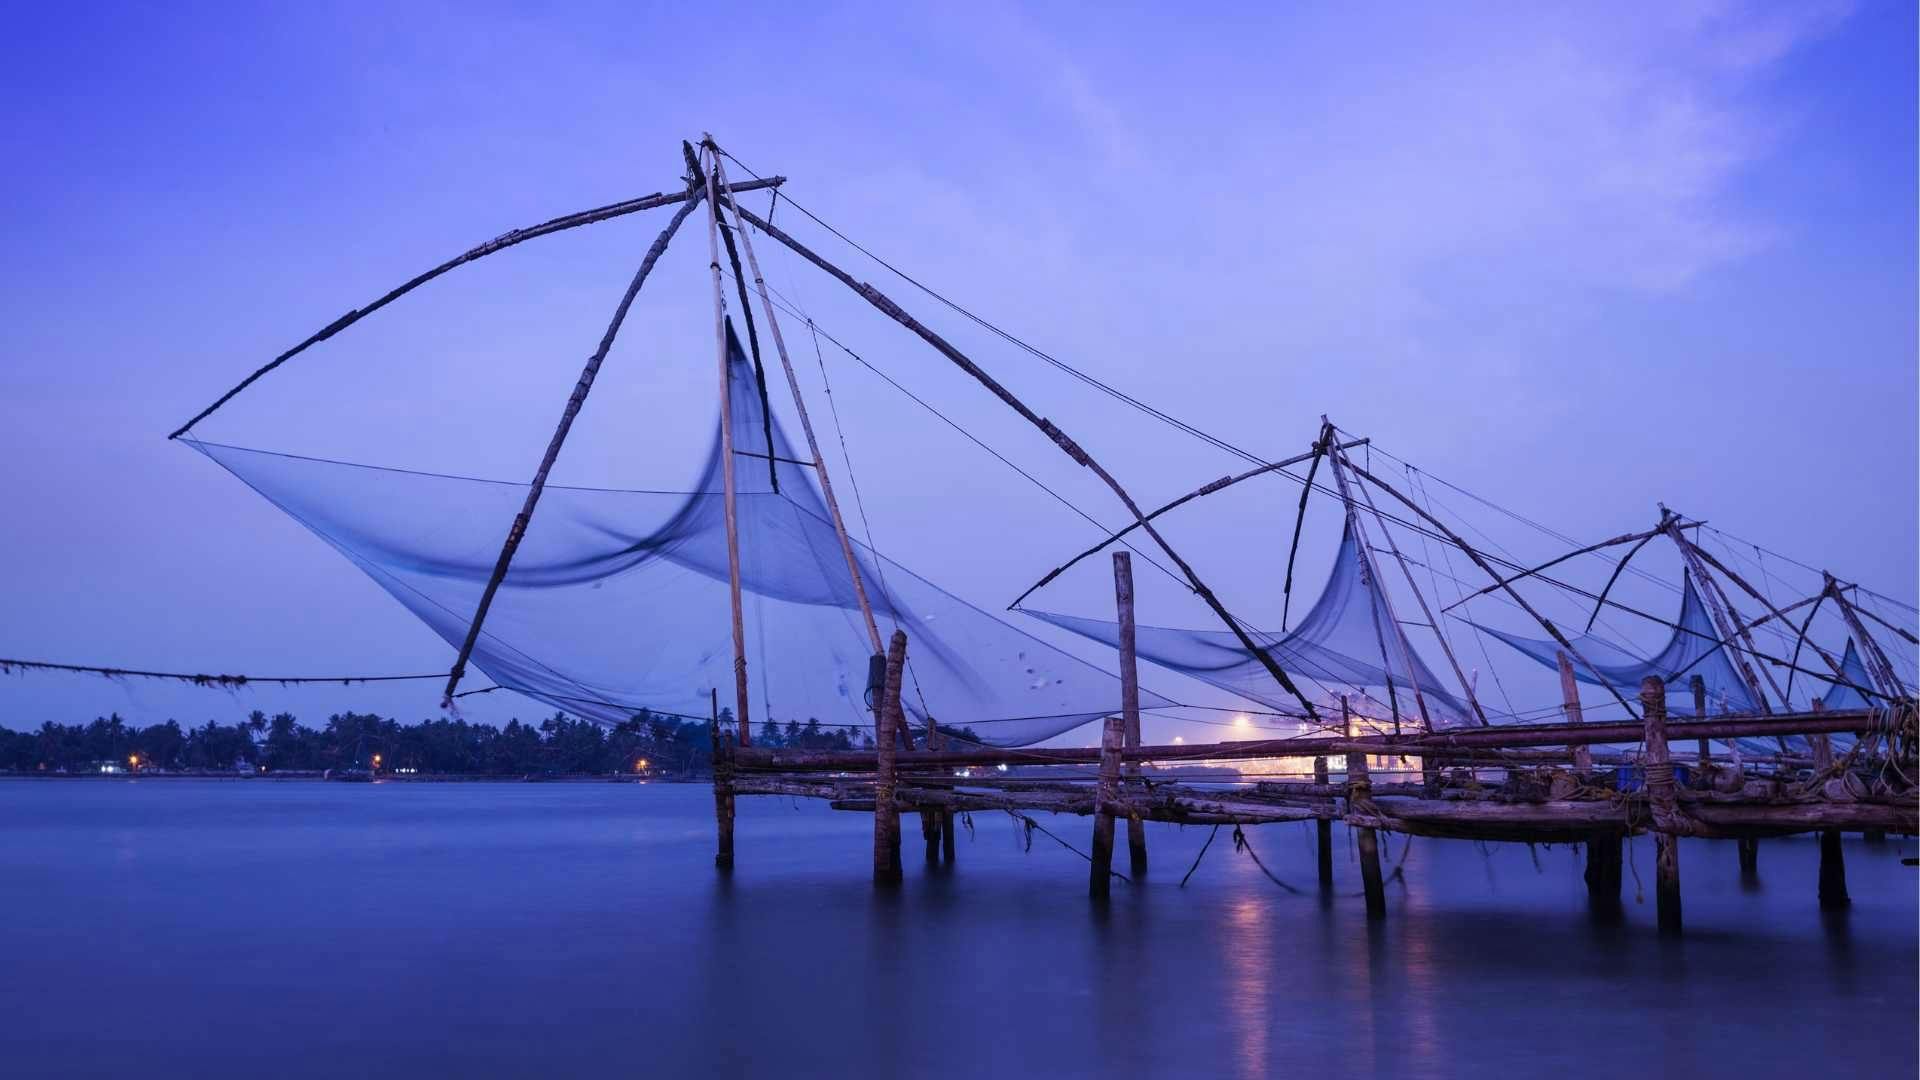 Fishnet image in Kochi, kerala